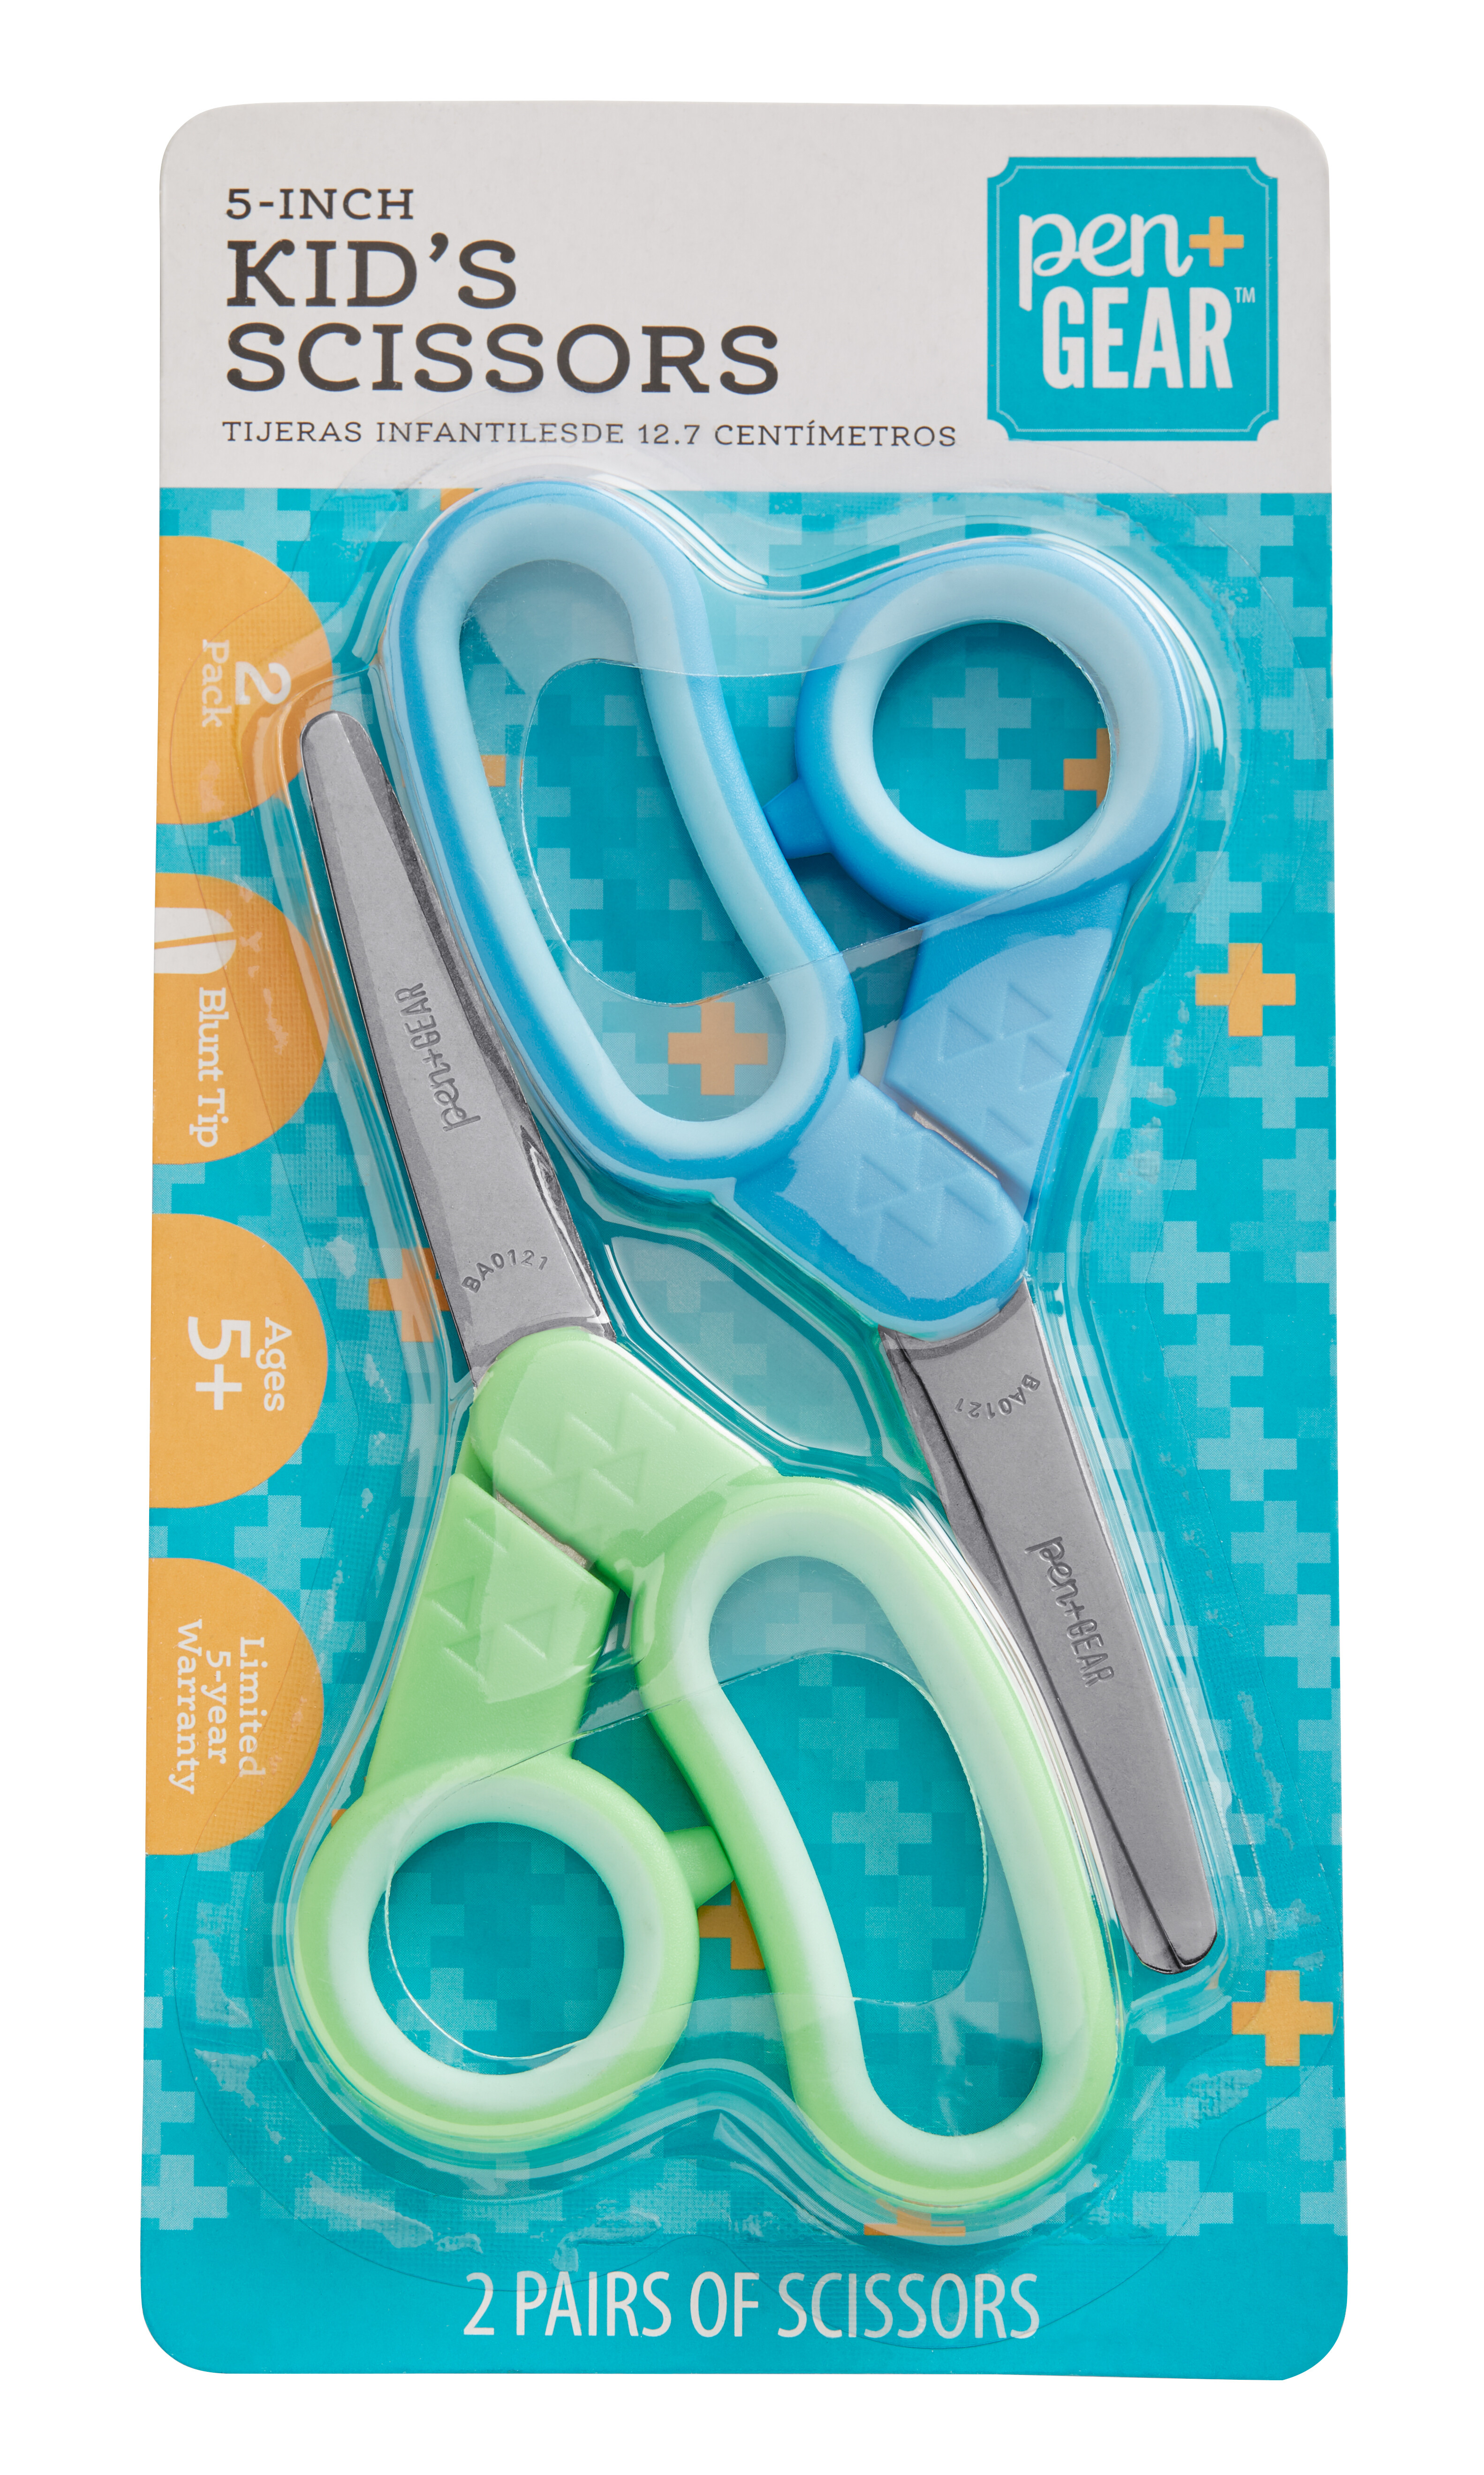 Pen and Gear Kids Scissors, 5", Blunt, School Supplies for Kids 5+, Light Blue/Green, Pack of 2 - image 1 of 3